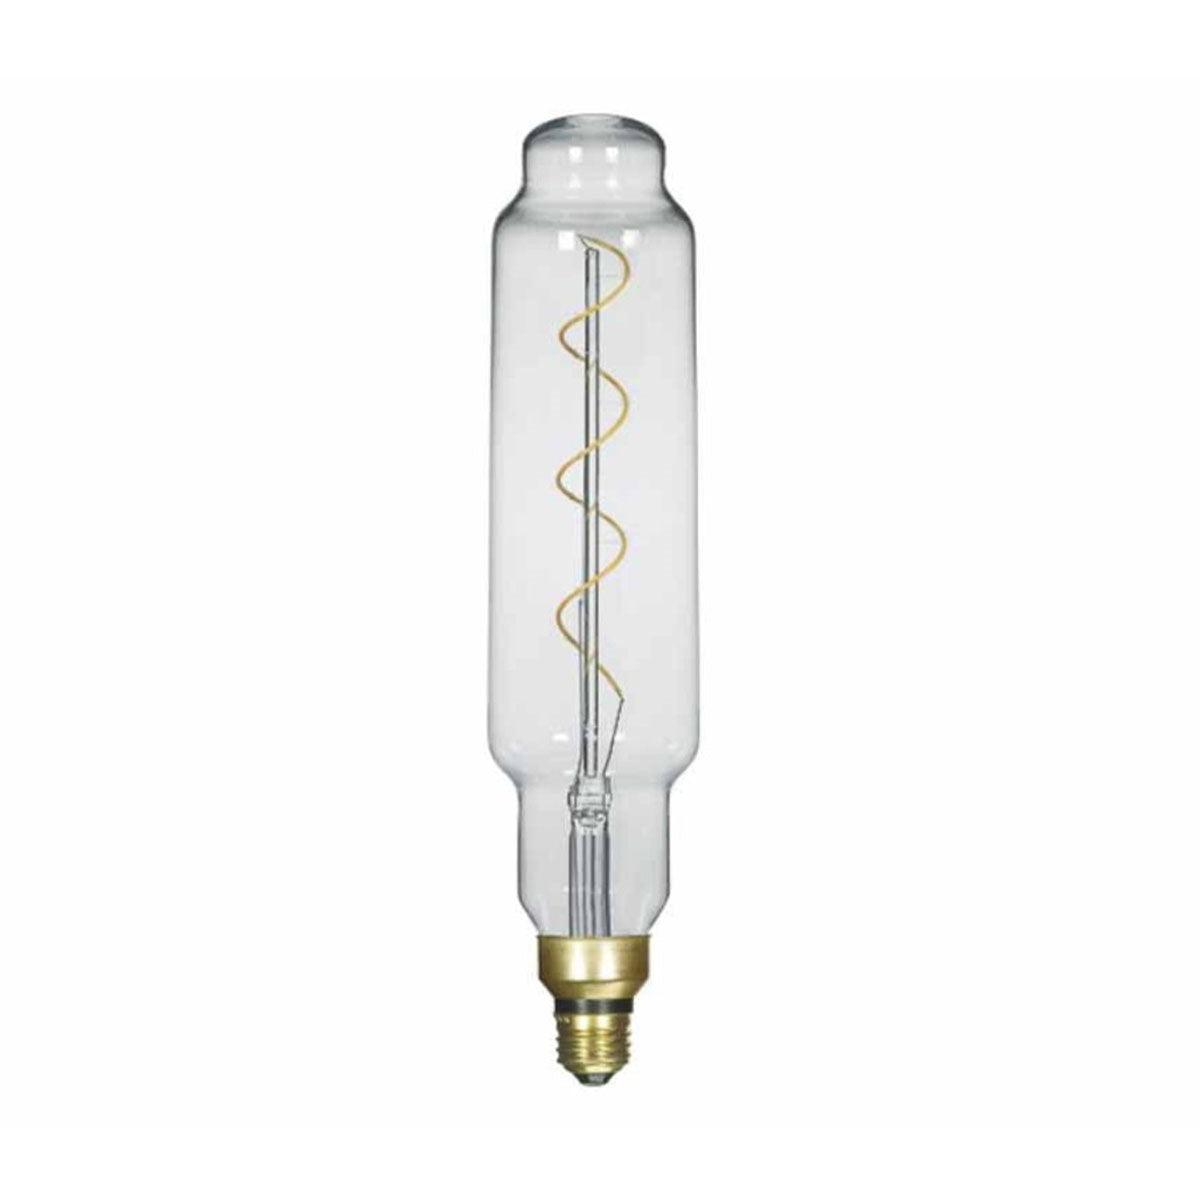 LED T24 Single Tube Bulb, 4 Watt, 200 Lumens, 2100K, E26 Medium Base, Clear Finish